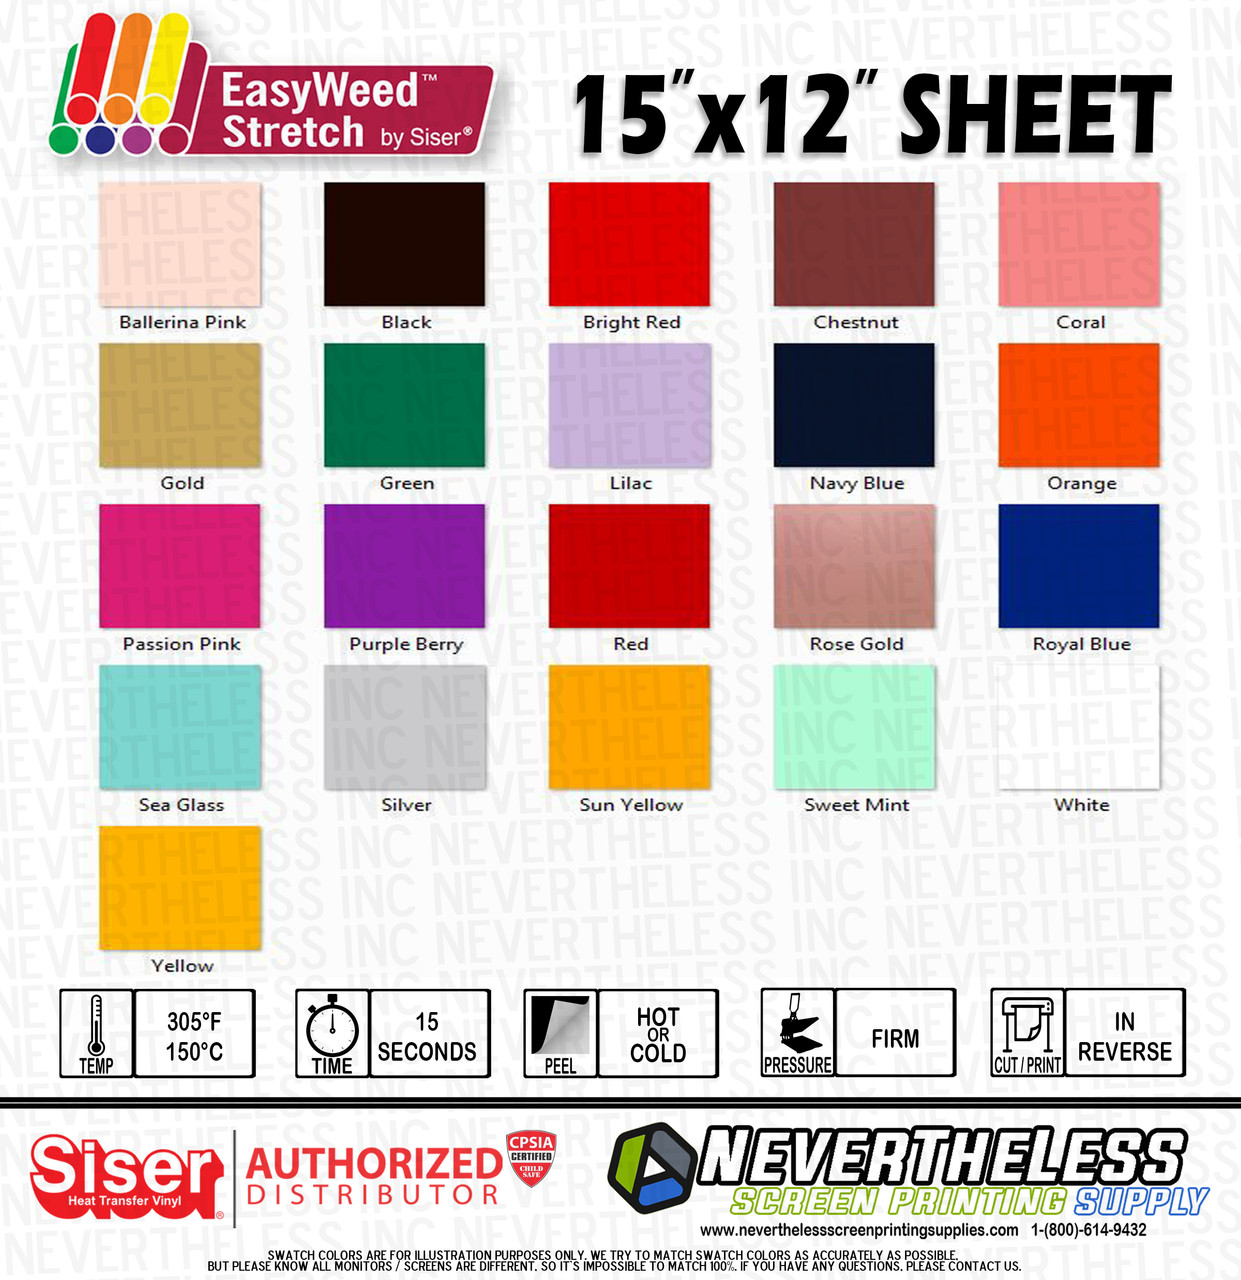 Black Siser EasyWeed 15x12 Sheet 